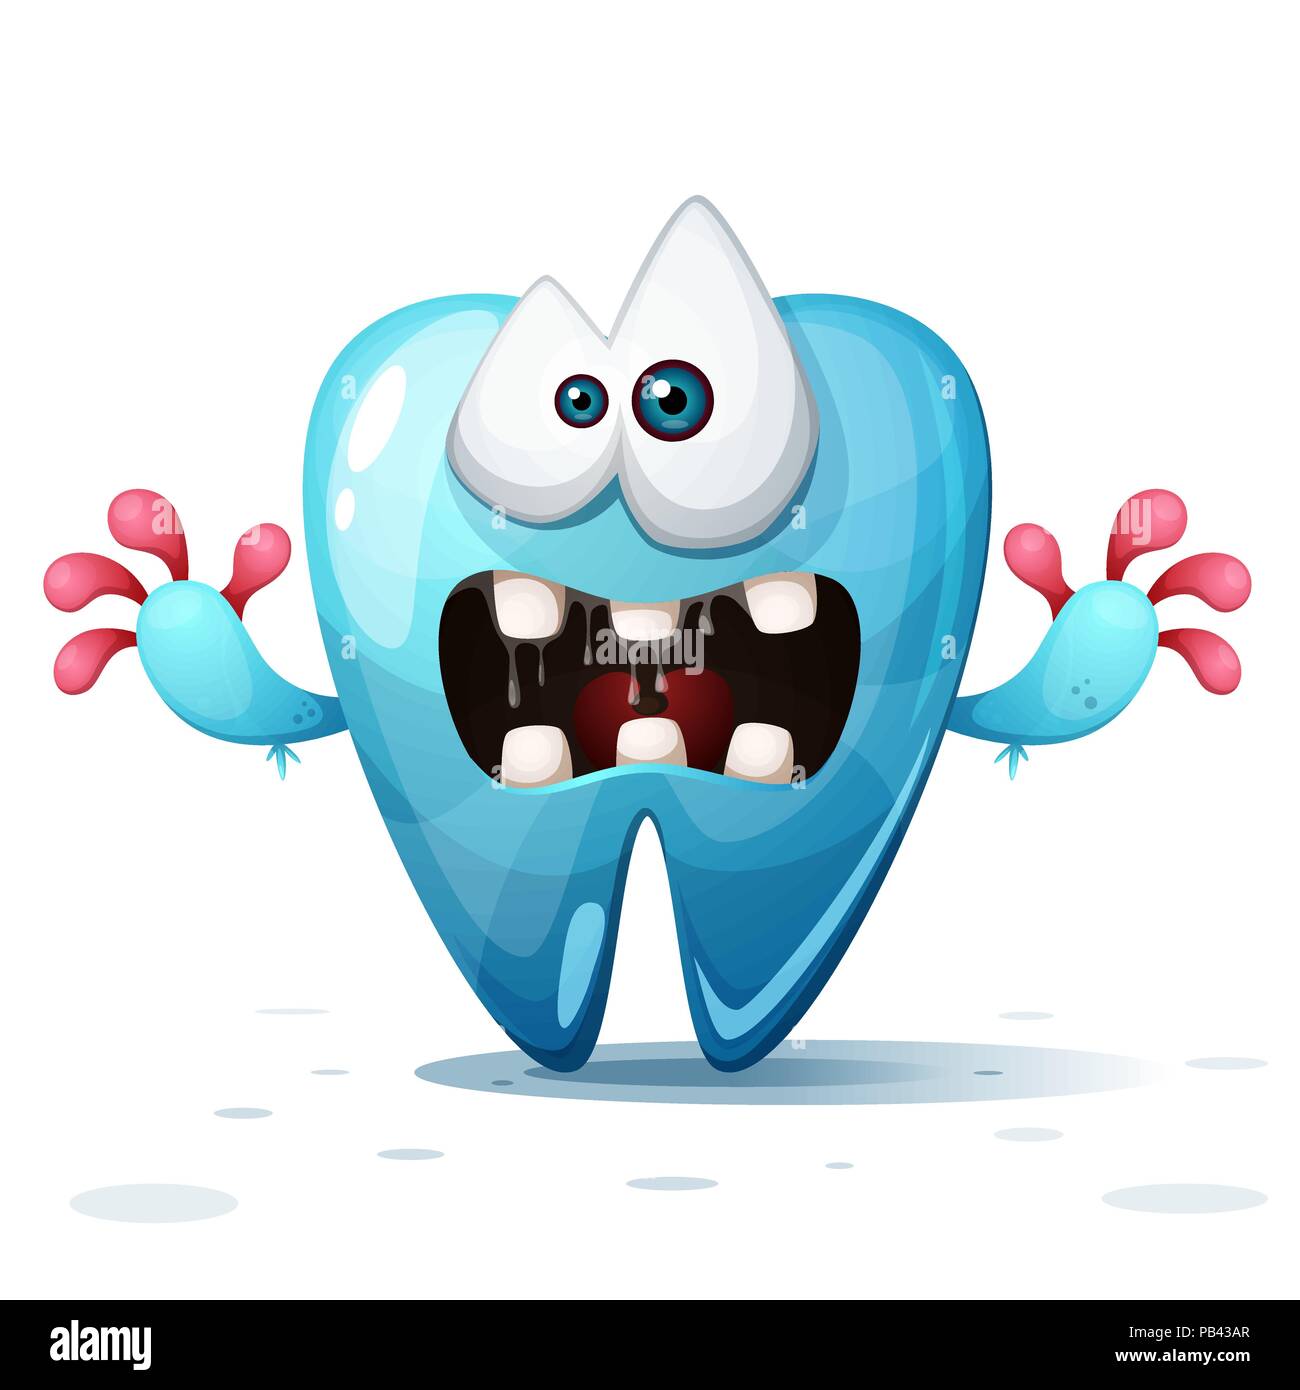 Cute, funny, crazy cartoon tooth illustration. Stock Vector